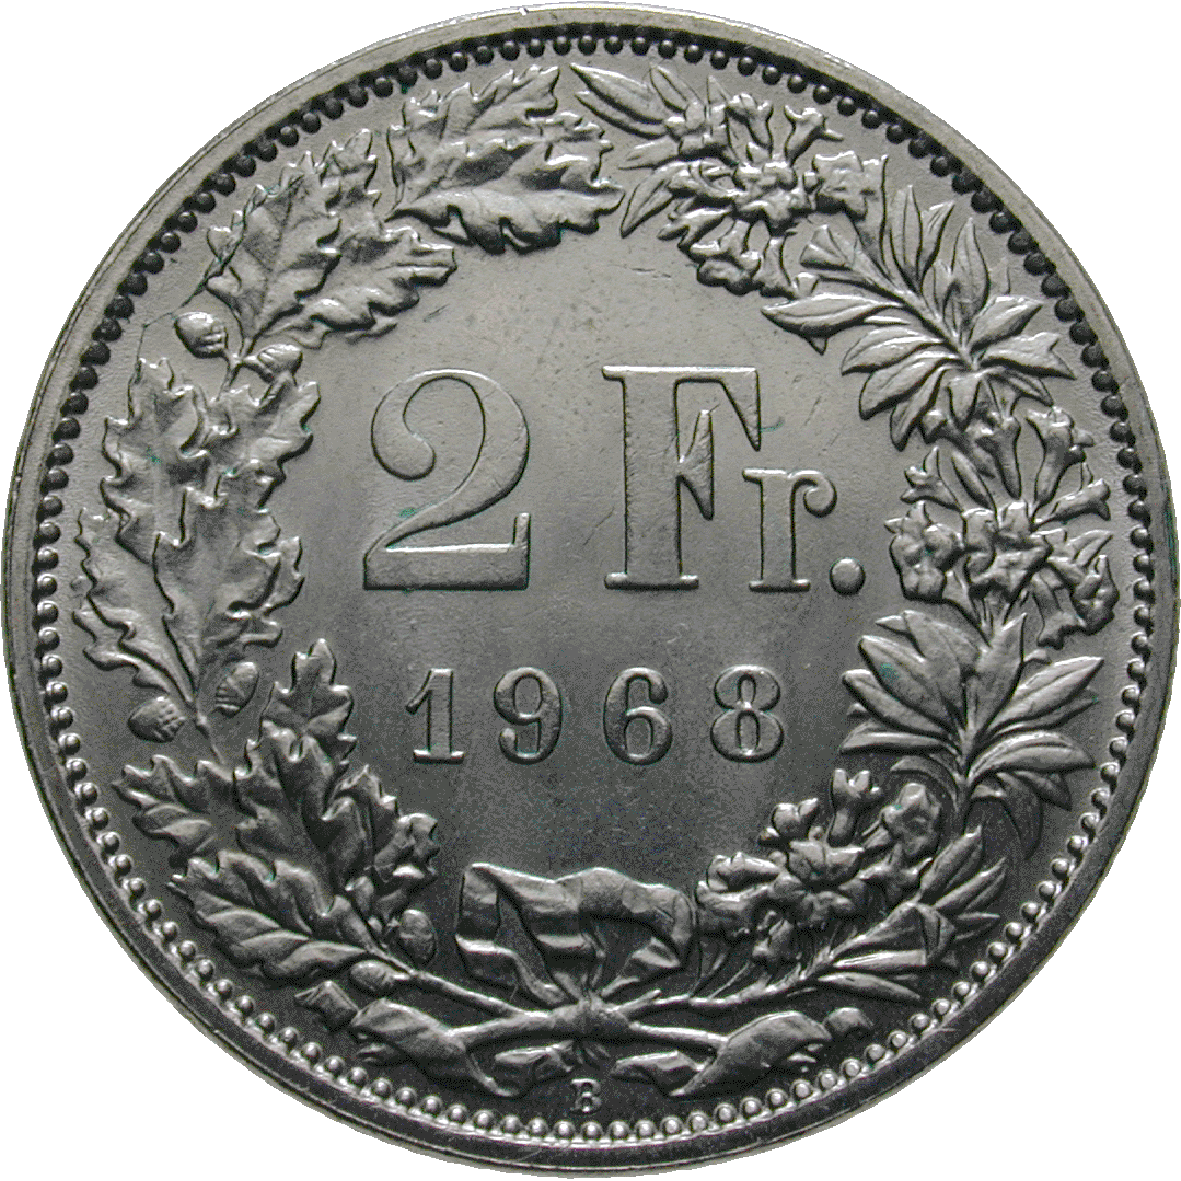 Swiss Confederation, 2 Francs 1968 (reverse)